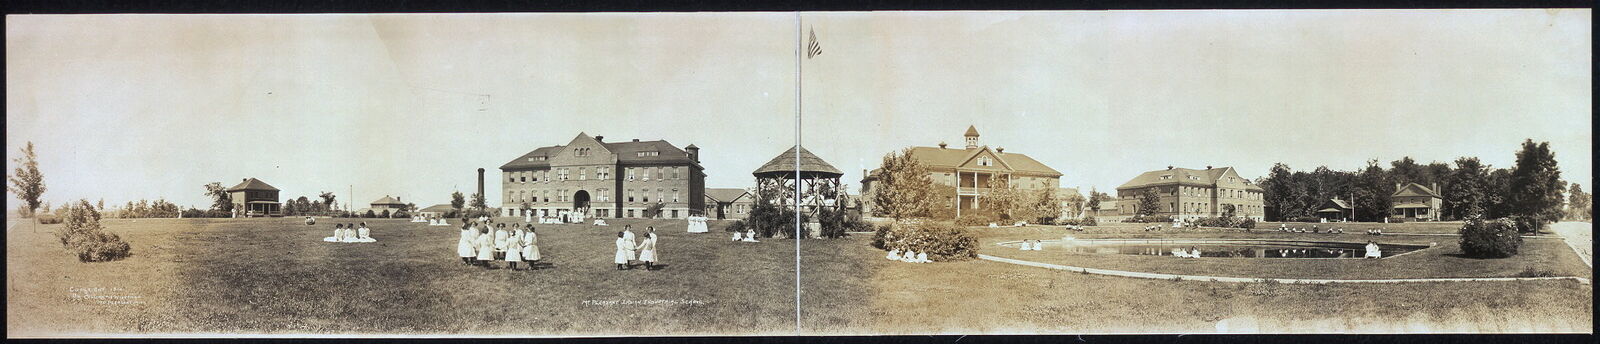 Photo:1910 Panoramic: Mt. Pleasant Indian Industrial School, Michigan